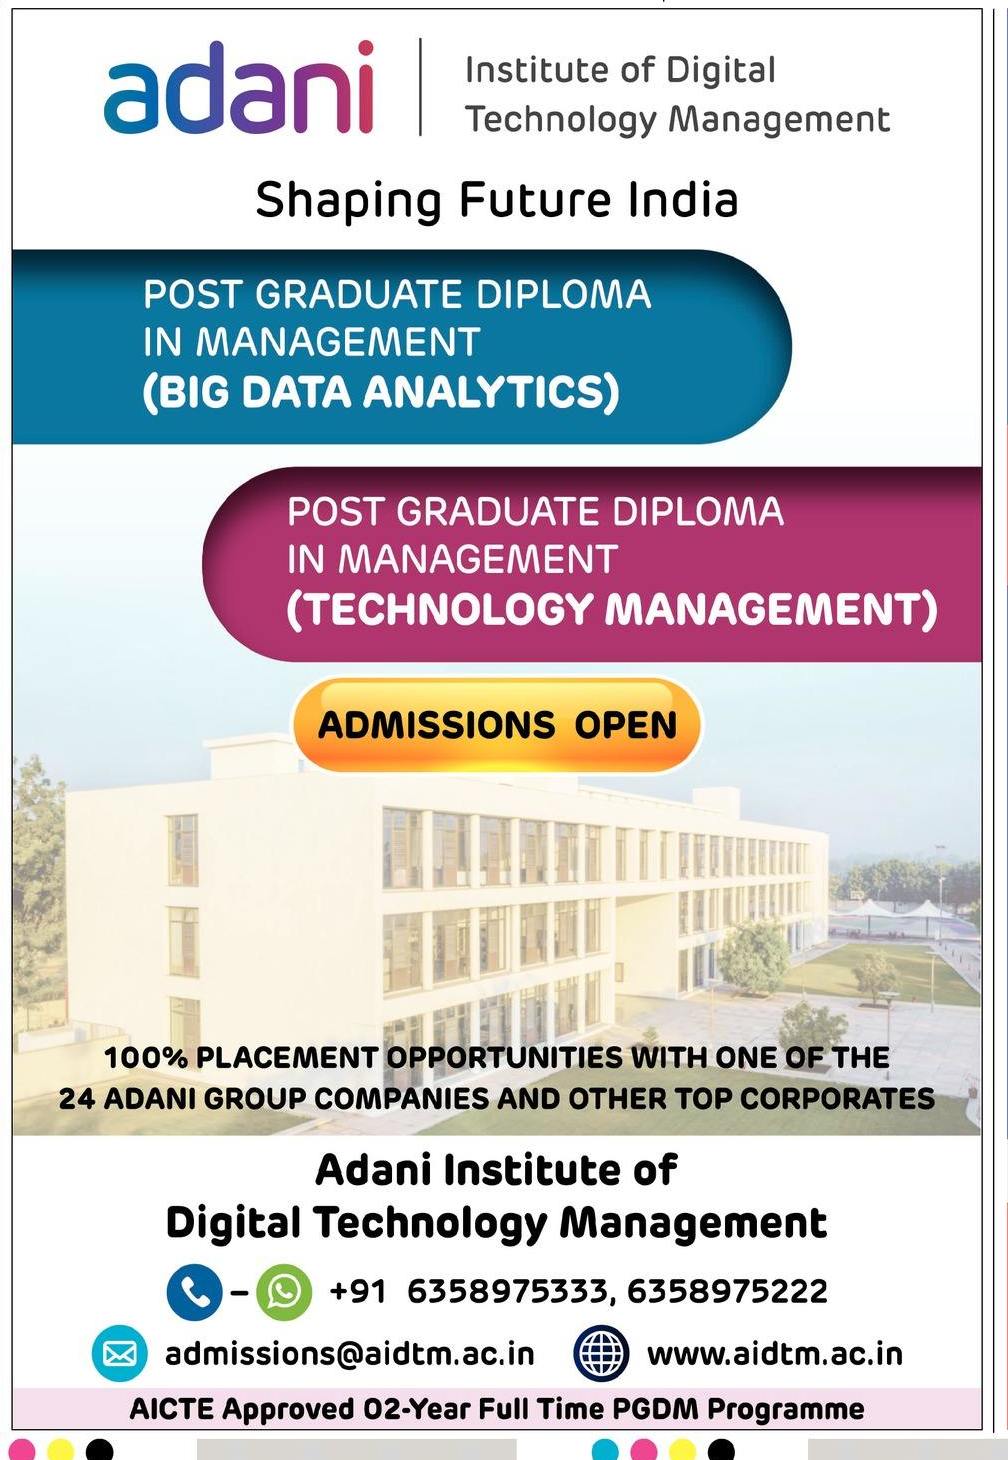 adani-institute-of-digital-technology-management-ad-gujarat-samachar-ahmedabad-20-06-2021